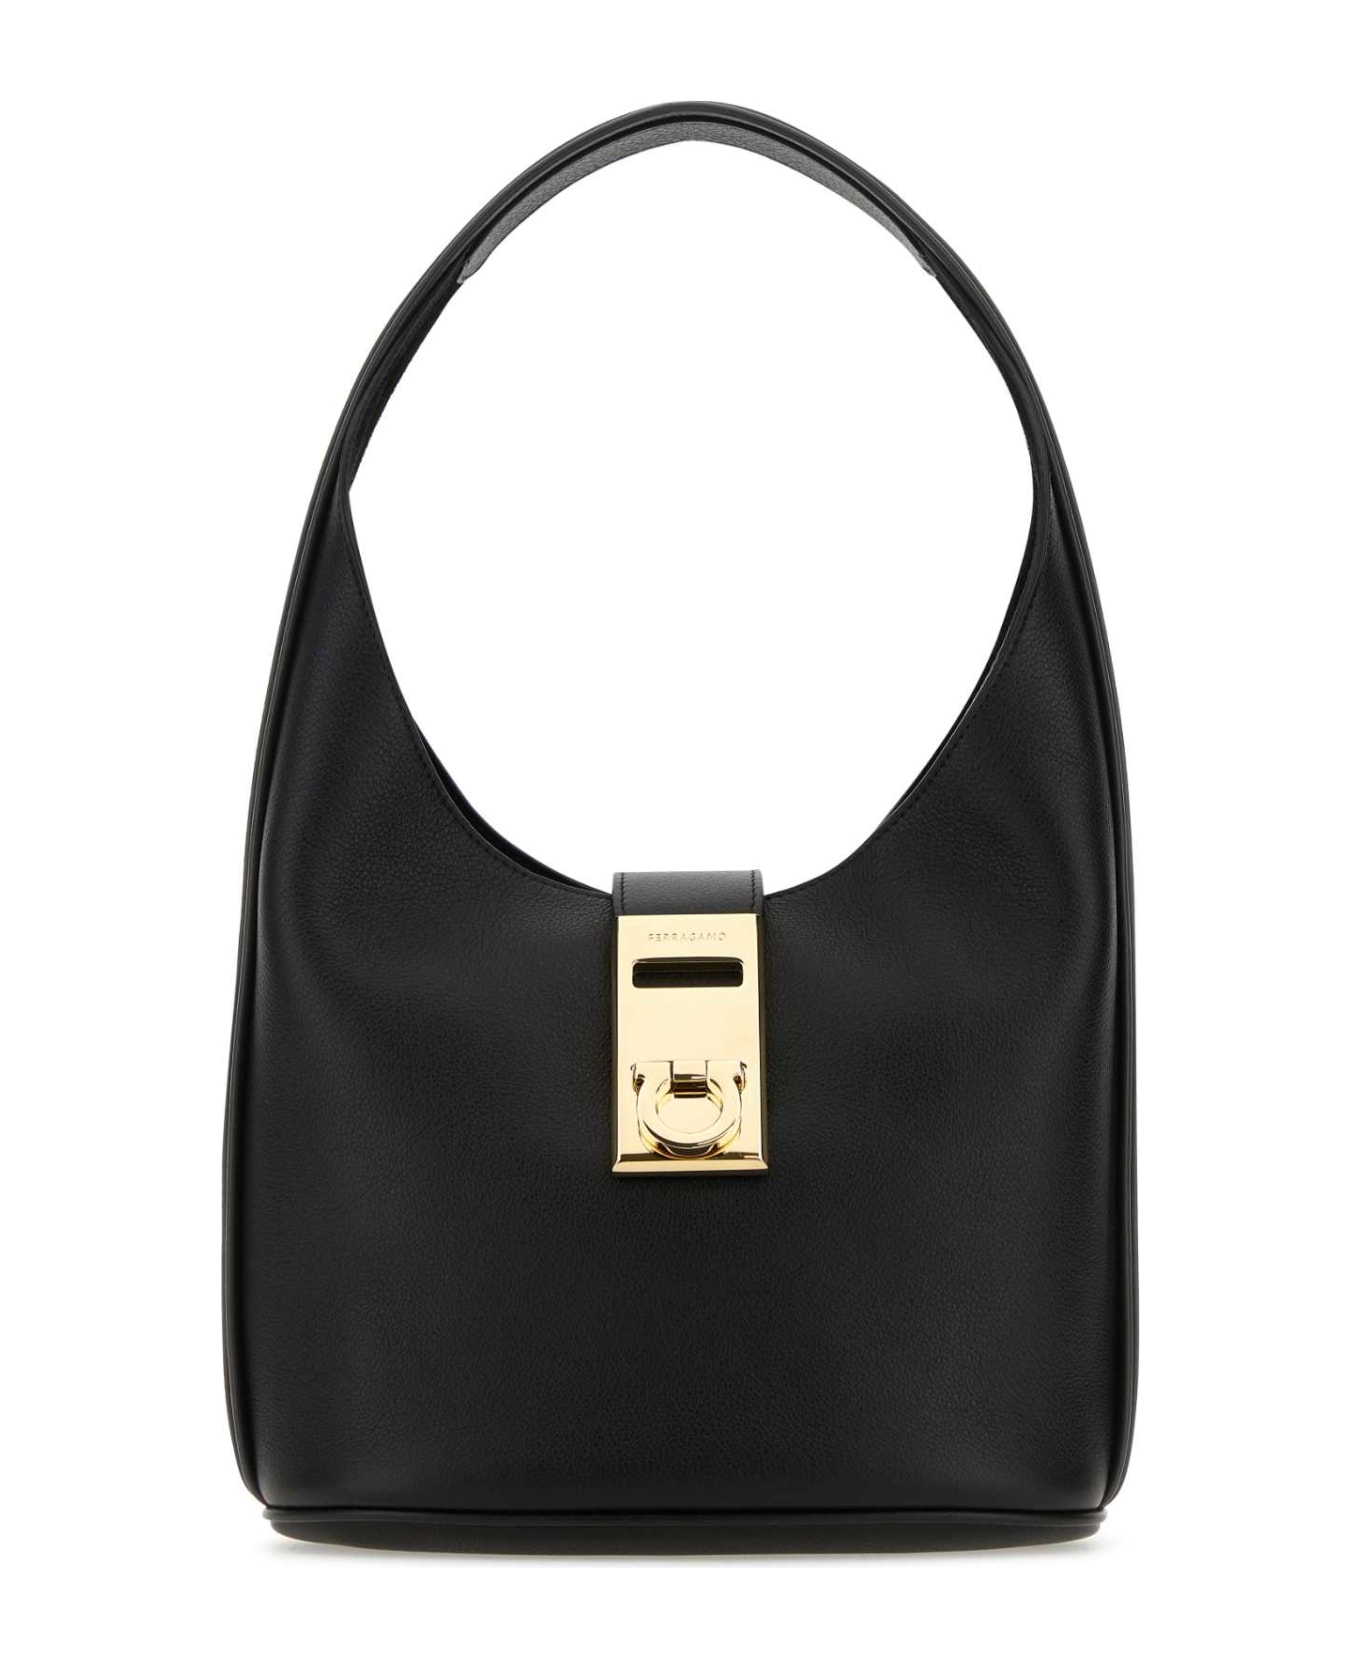 Ferragamo Black Leather Medium Hobo Handbag - NERO